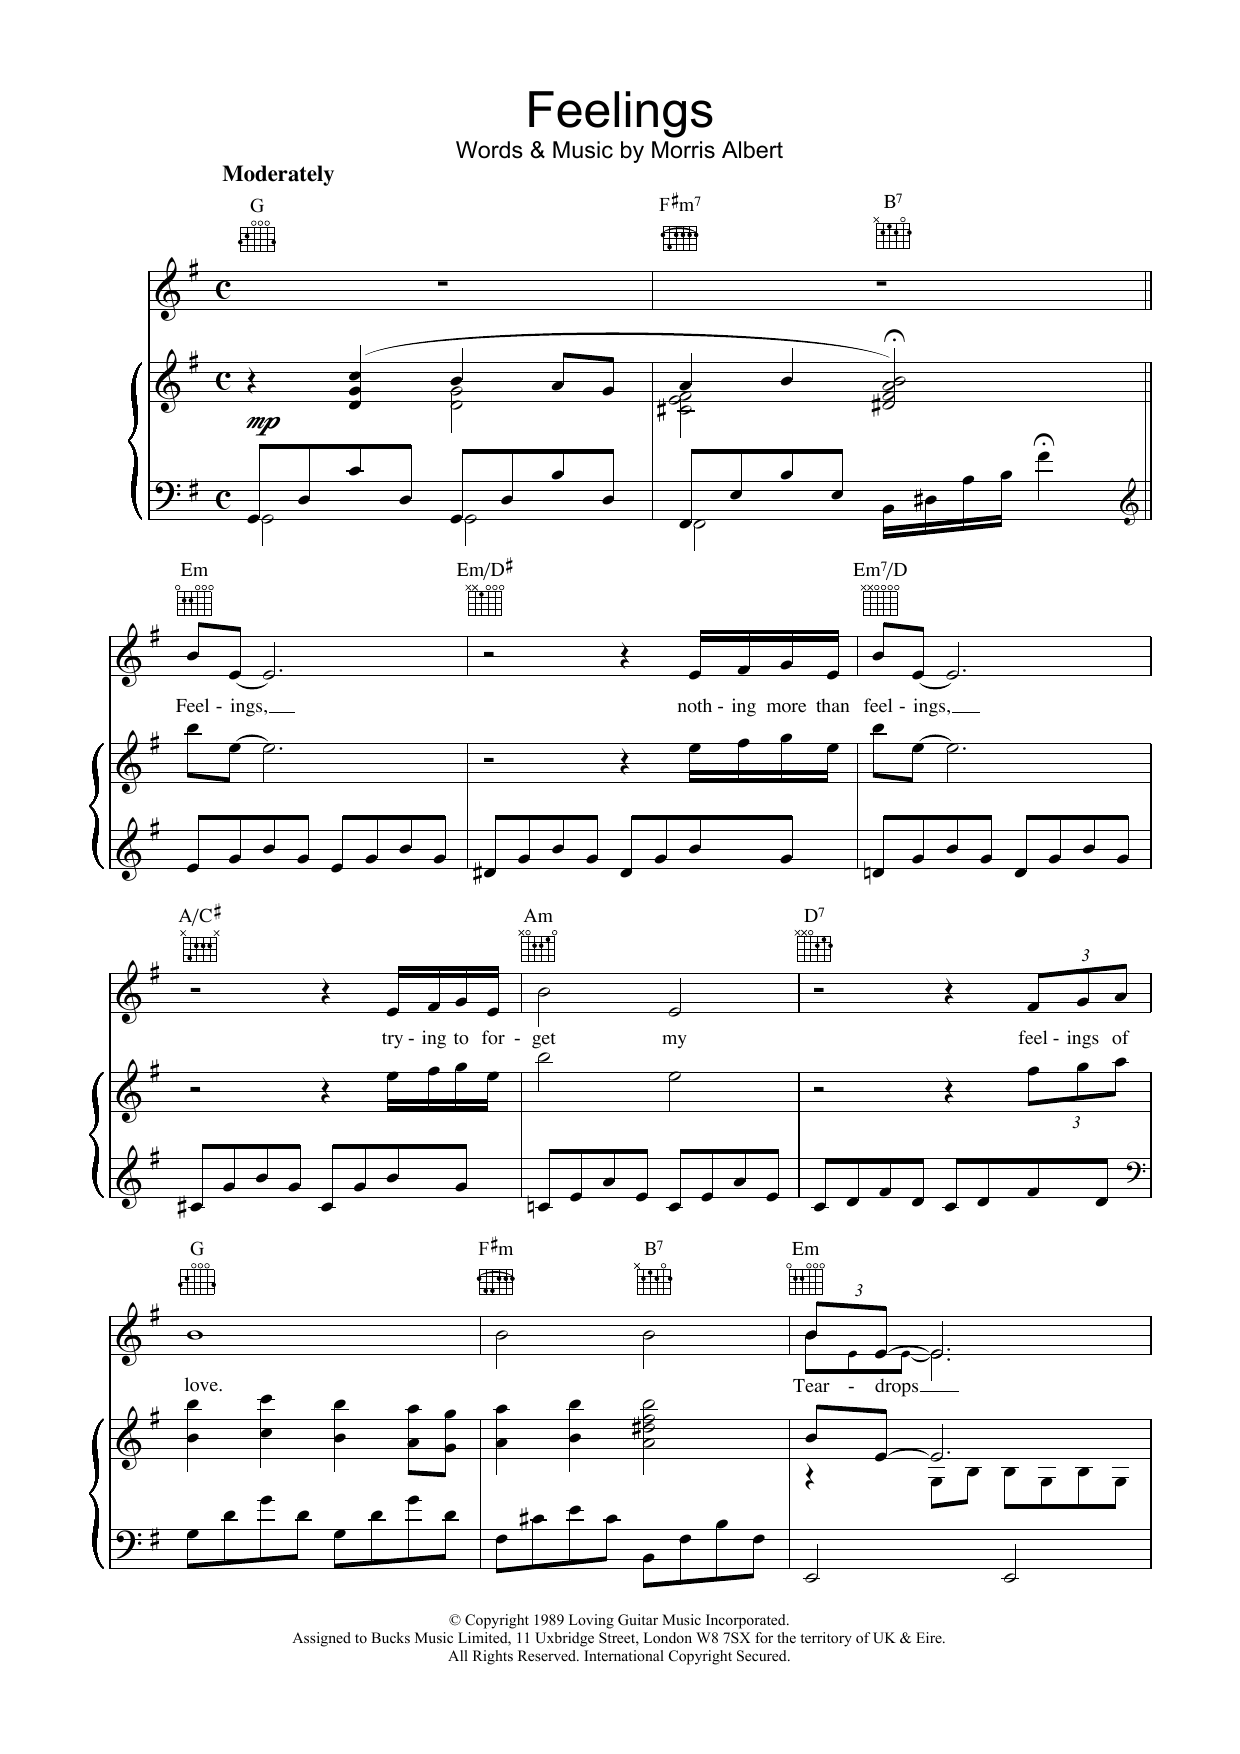 Morris Albert Feelings (Dime) Sheet Music Notes & Chords for Piano Transcription - Download or Print PDF